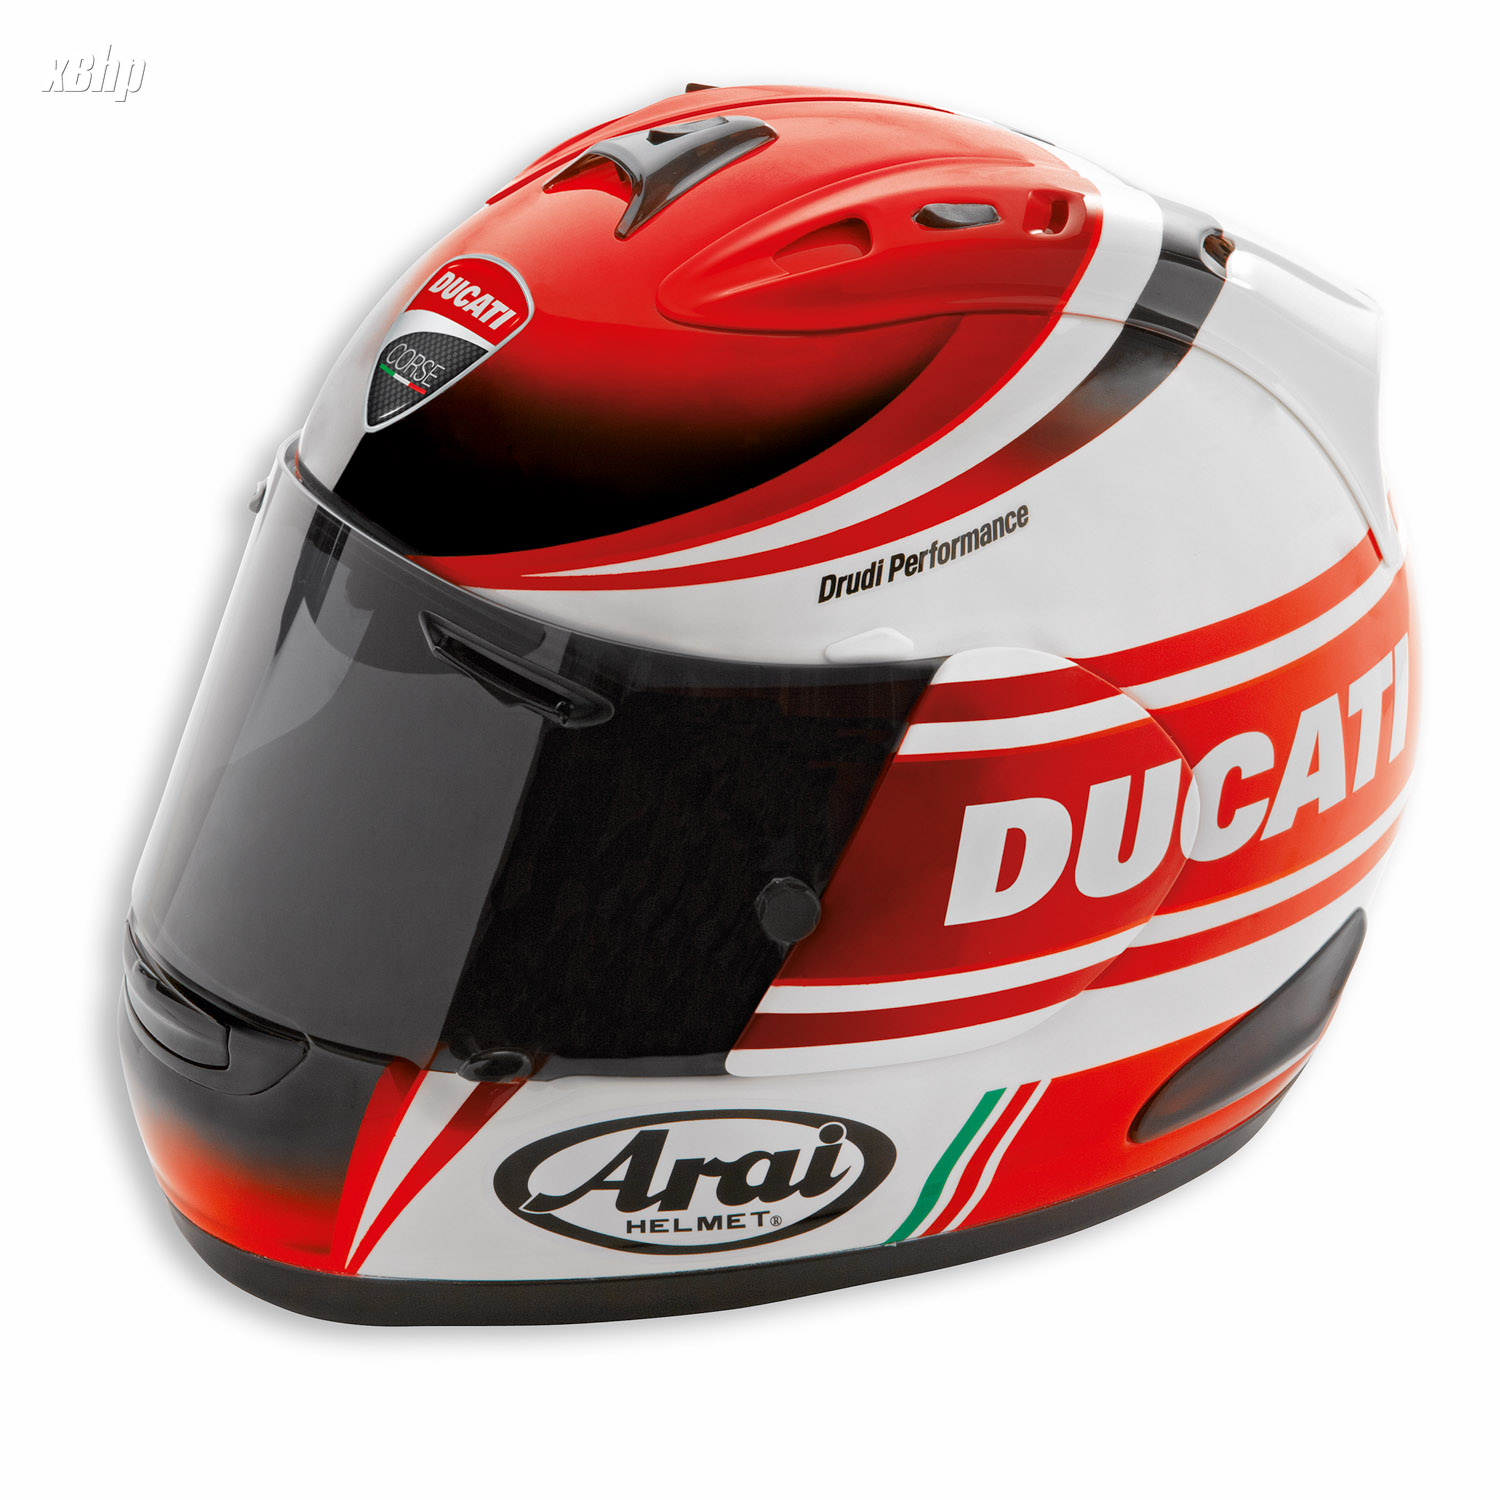 Ducati_Panigale_959-6